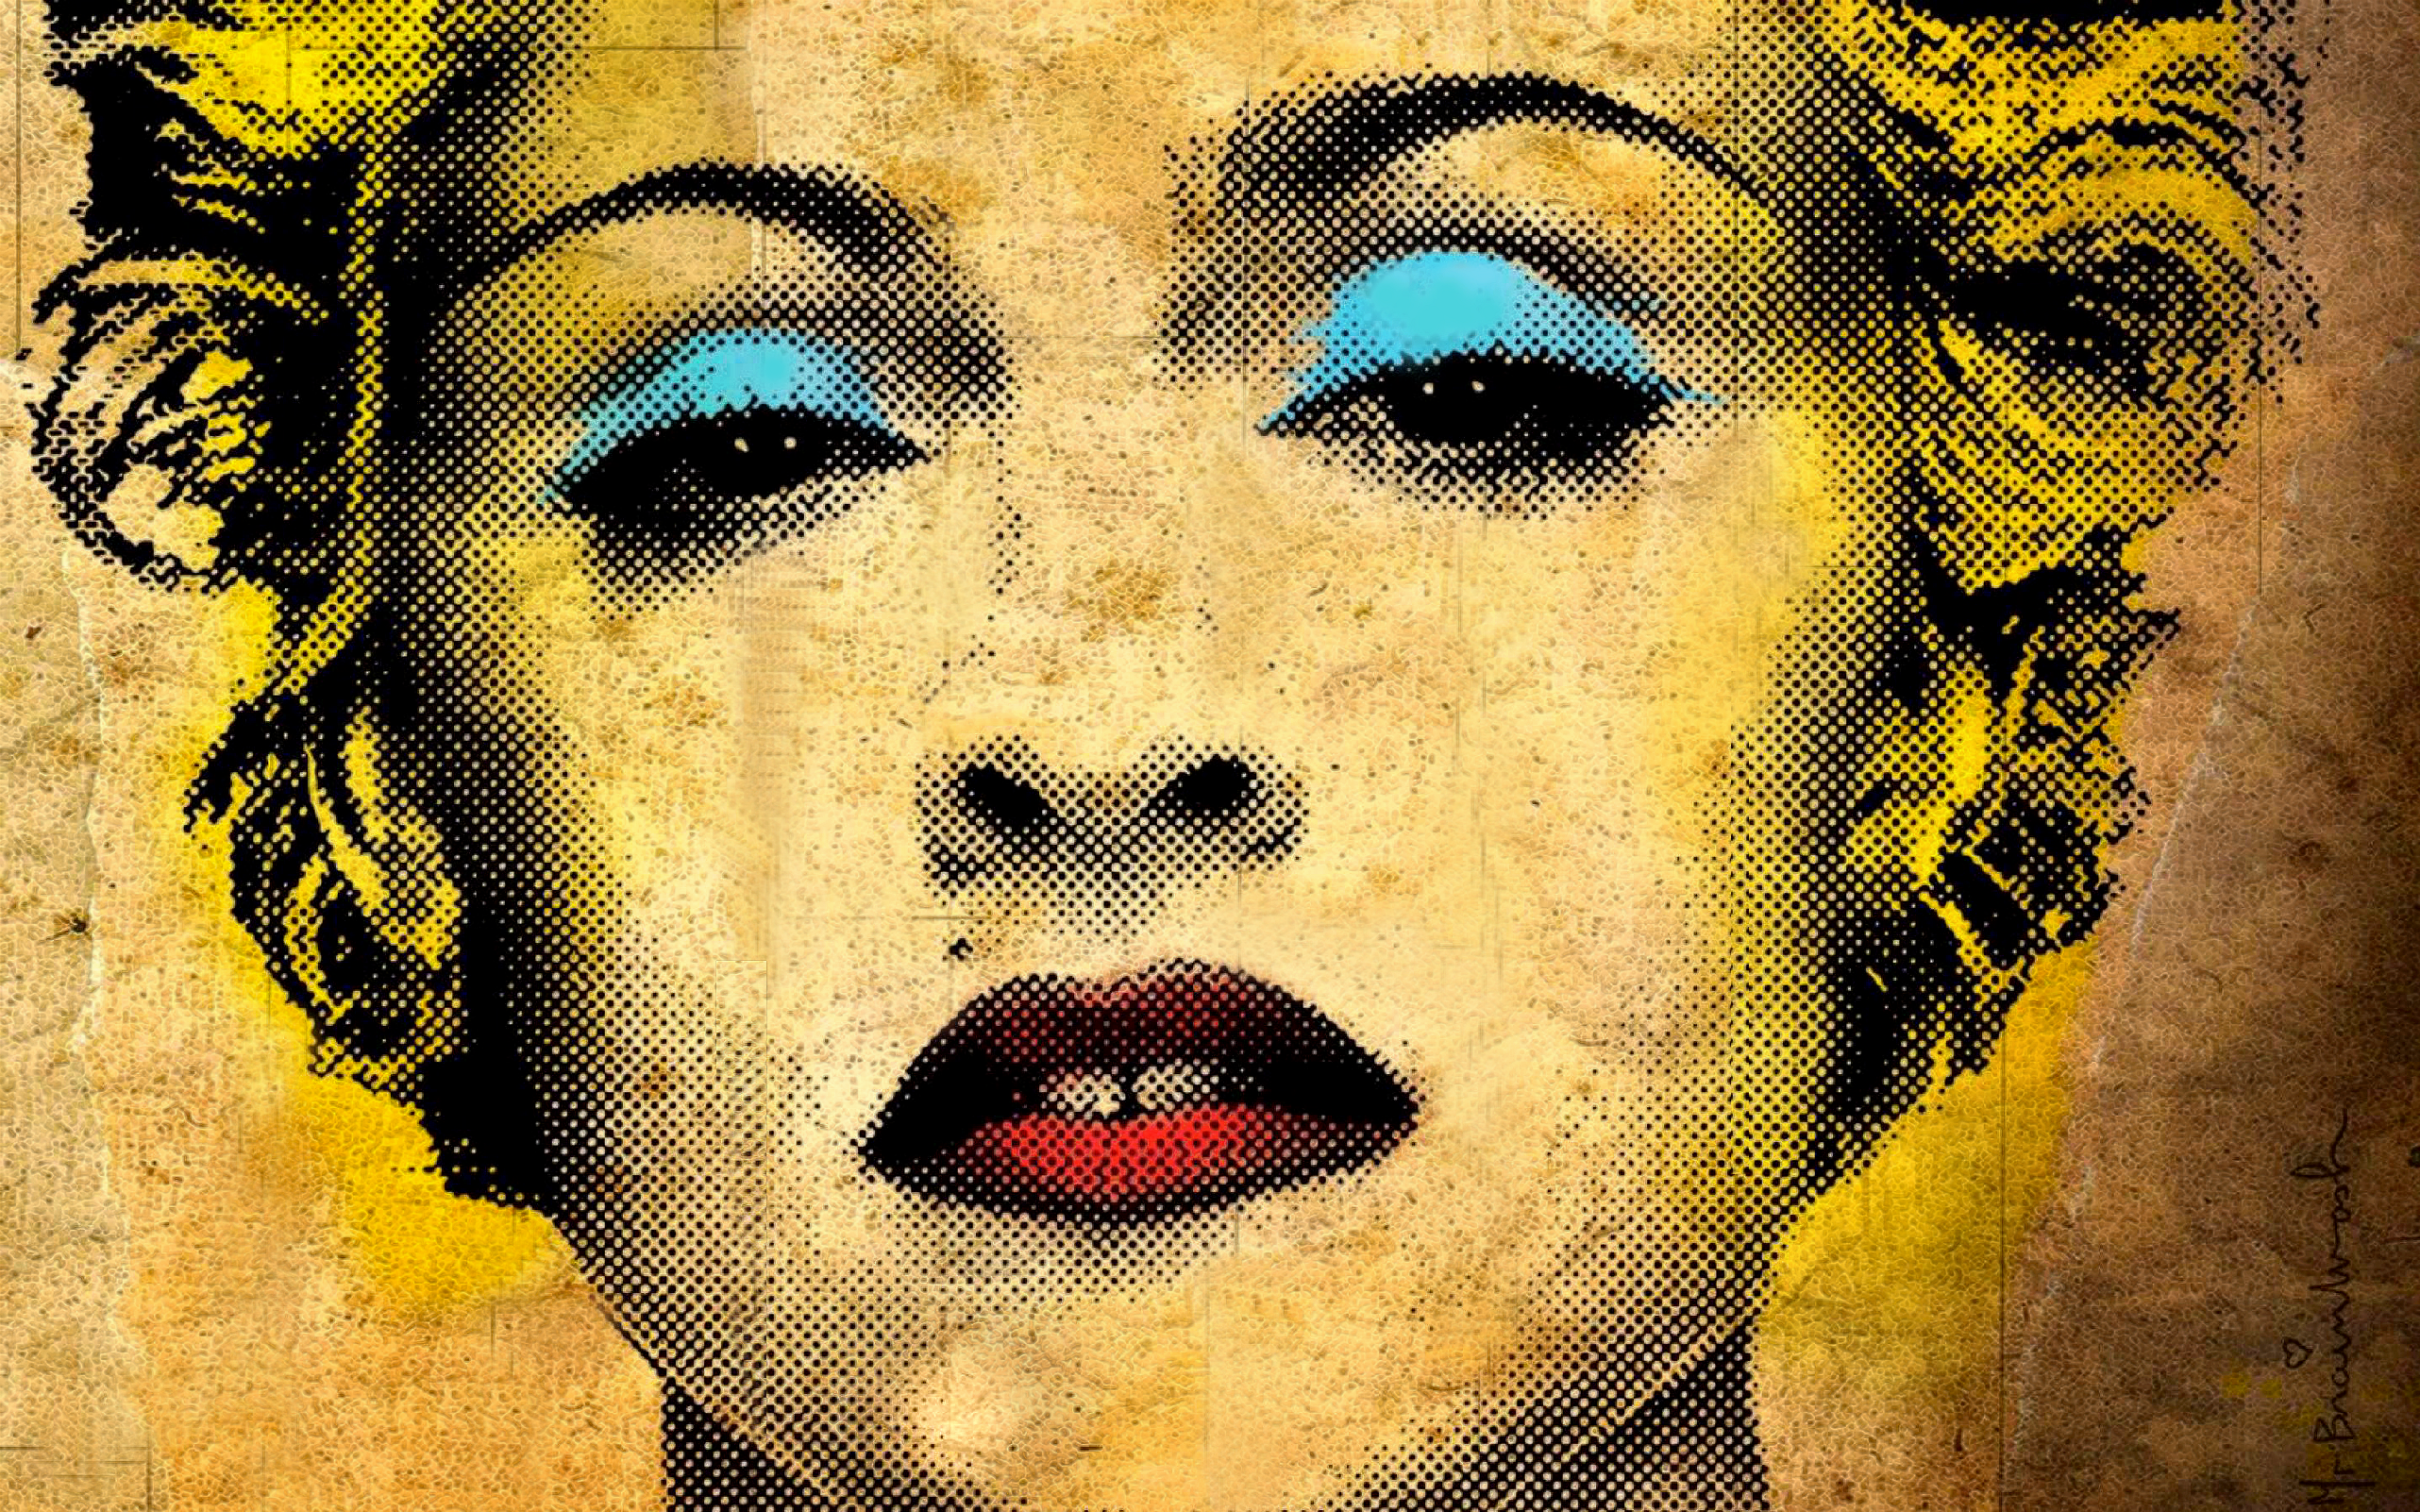 100+] Madonna Wallpapers | Wallpapers.com